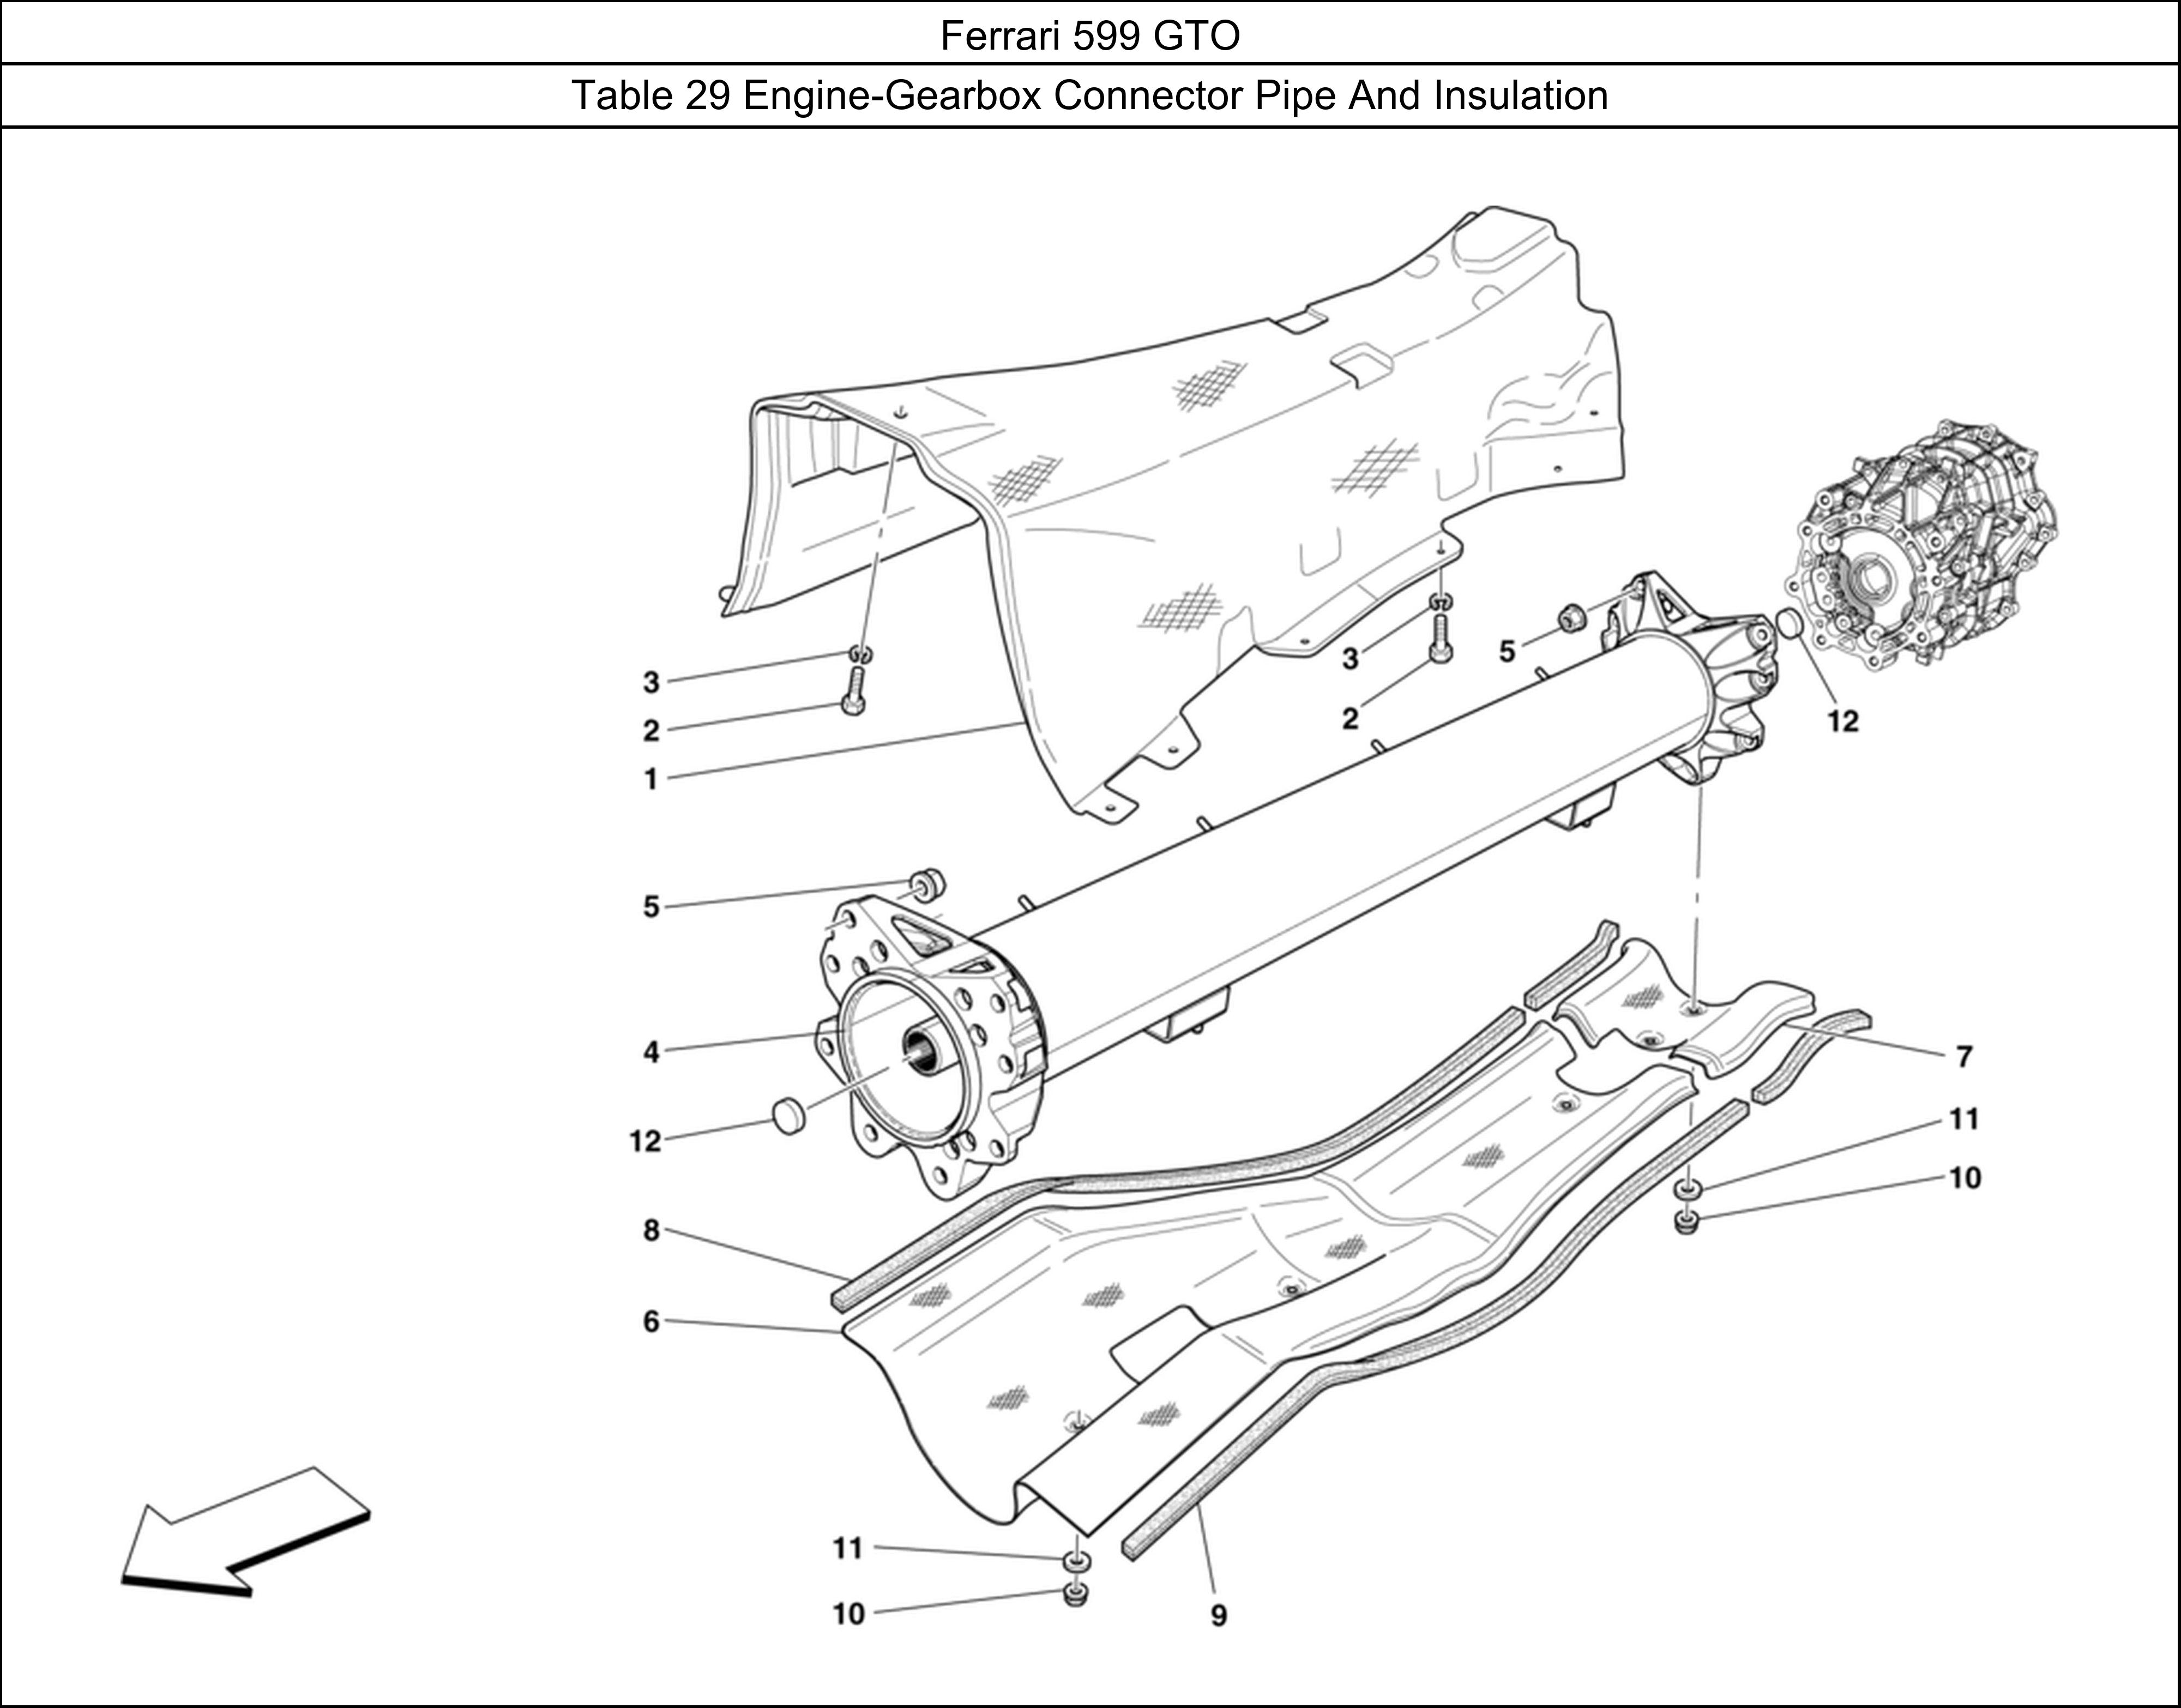 Ferrari Parts Ferrari 599 GTO Table 29 Engine-Gearbox Connector Pipe And Insulation